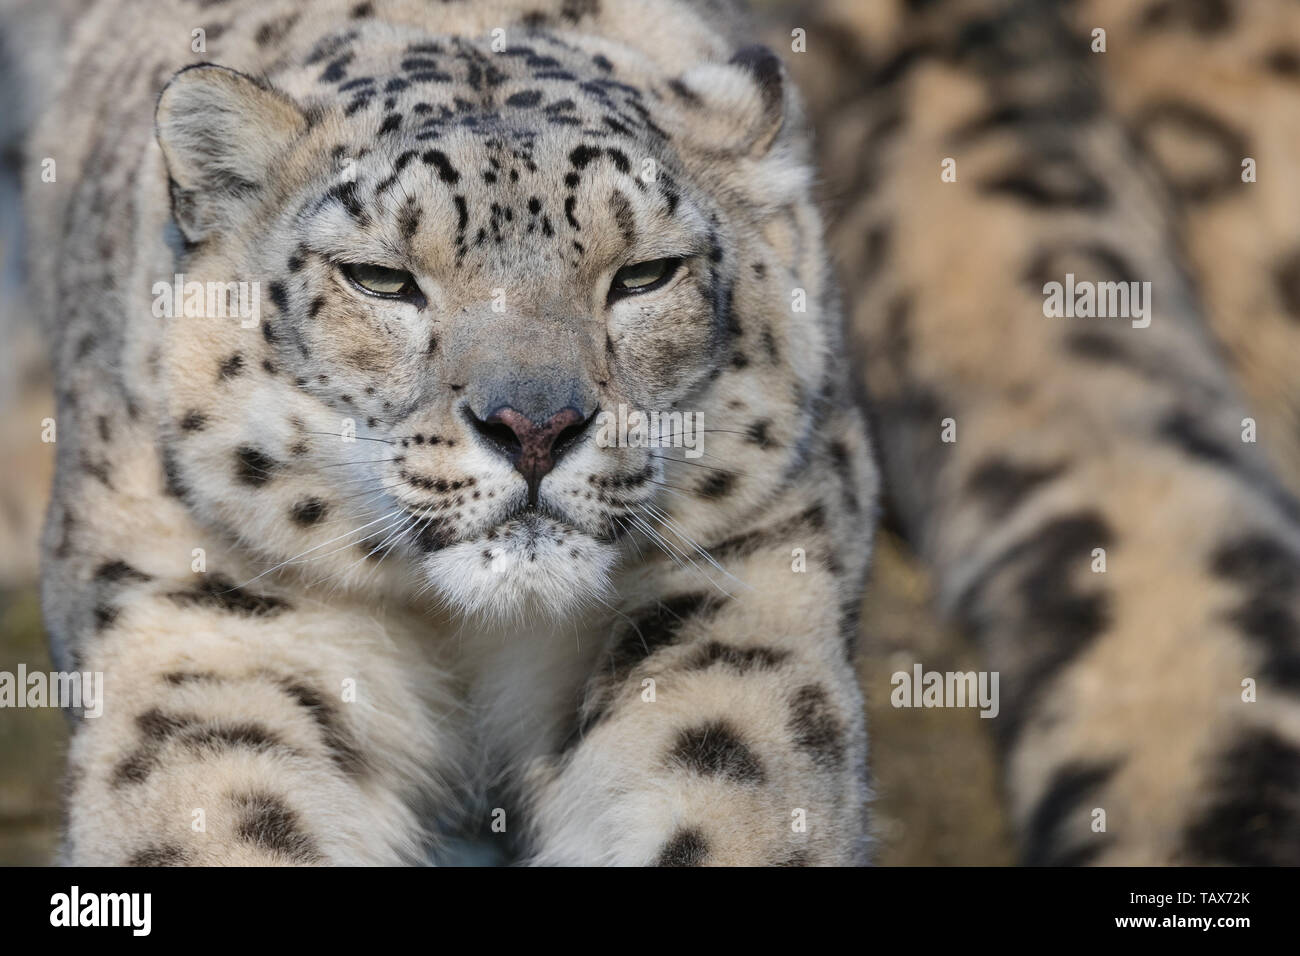 Snow Leopard stretching accanto al partner Foto Stock